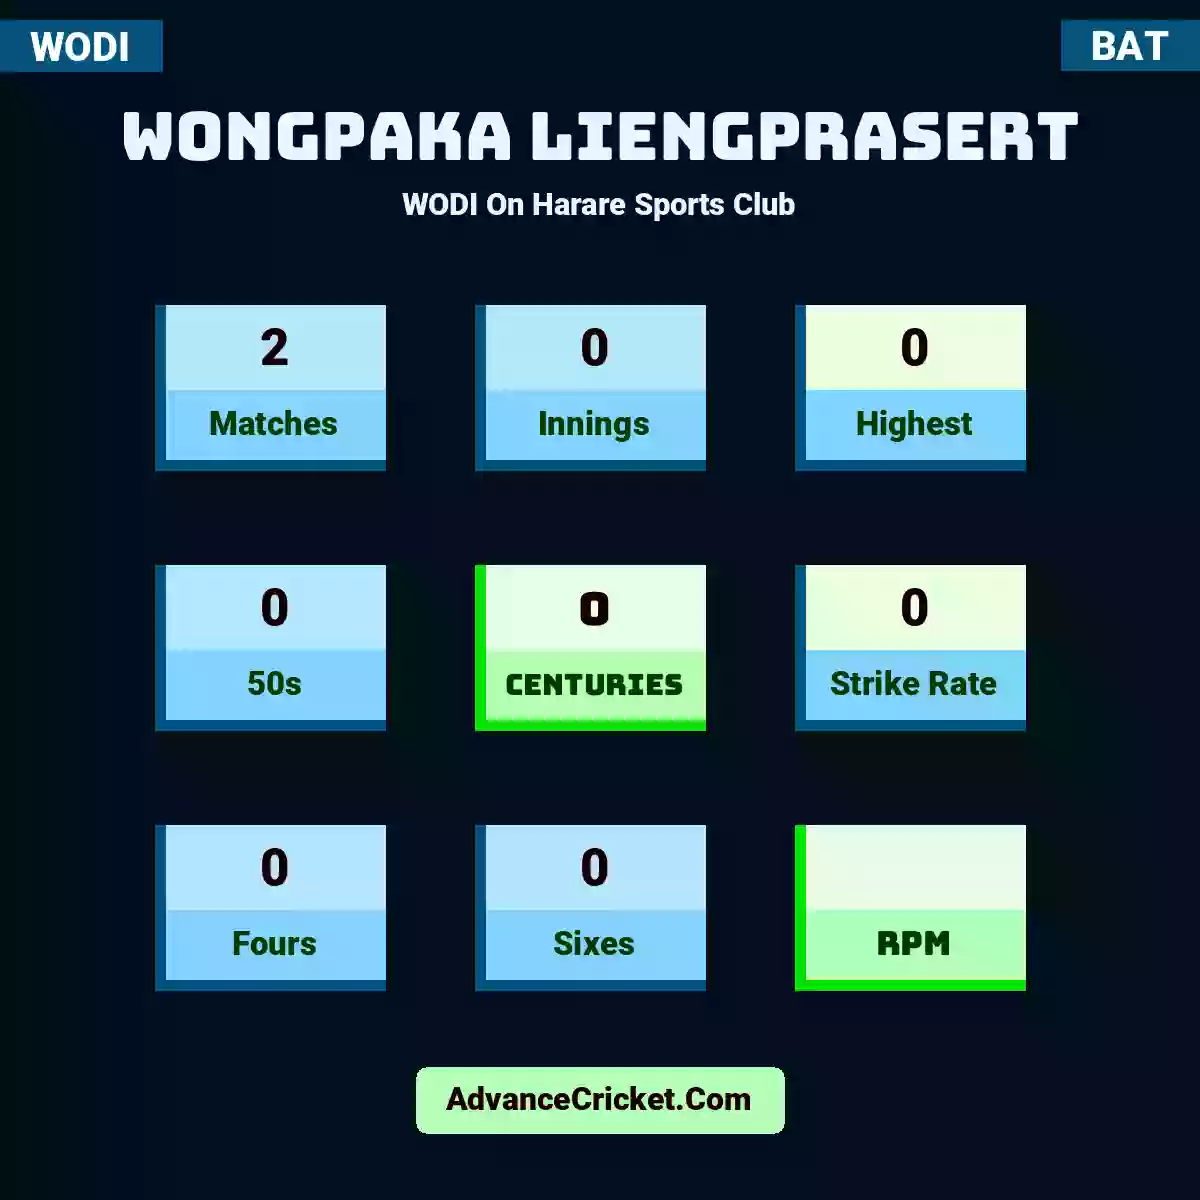 Wongpaka Liengprasert WODI  On Harare Sports Club, Wongpaka Liengprasert played 2 matches, scored 0 runs as highest, 0 half-centuries, and 0 centuries, with a strike rate of 0. W.Liengprasert hit 0 fours and 0 sixes.